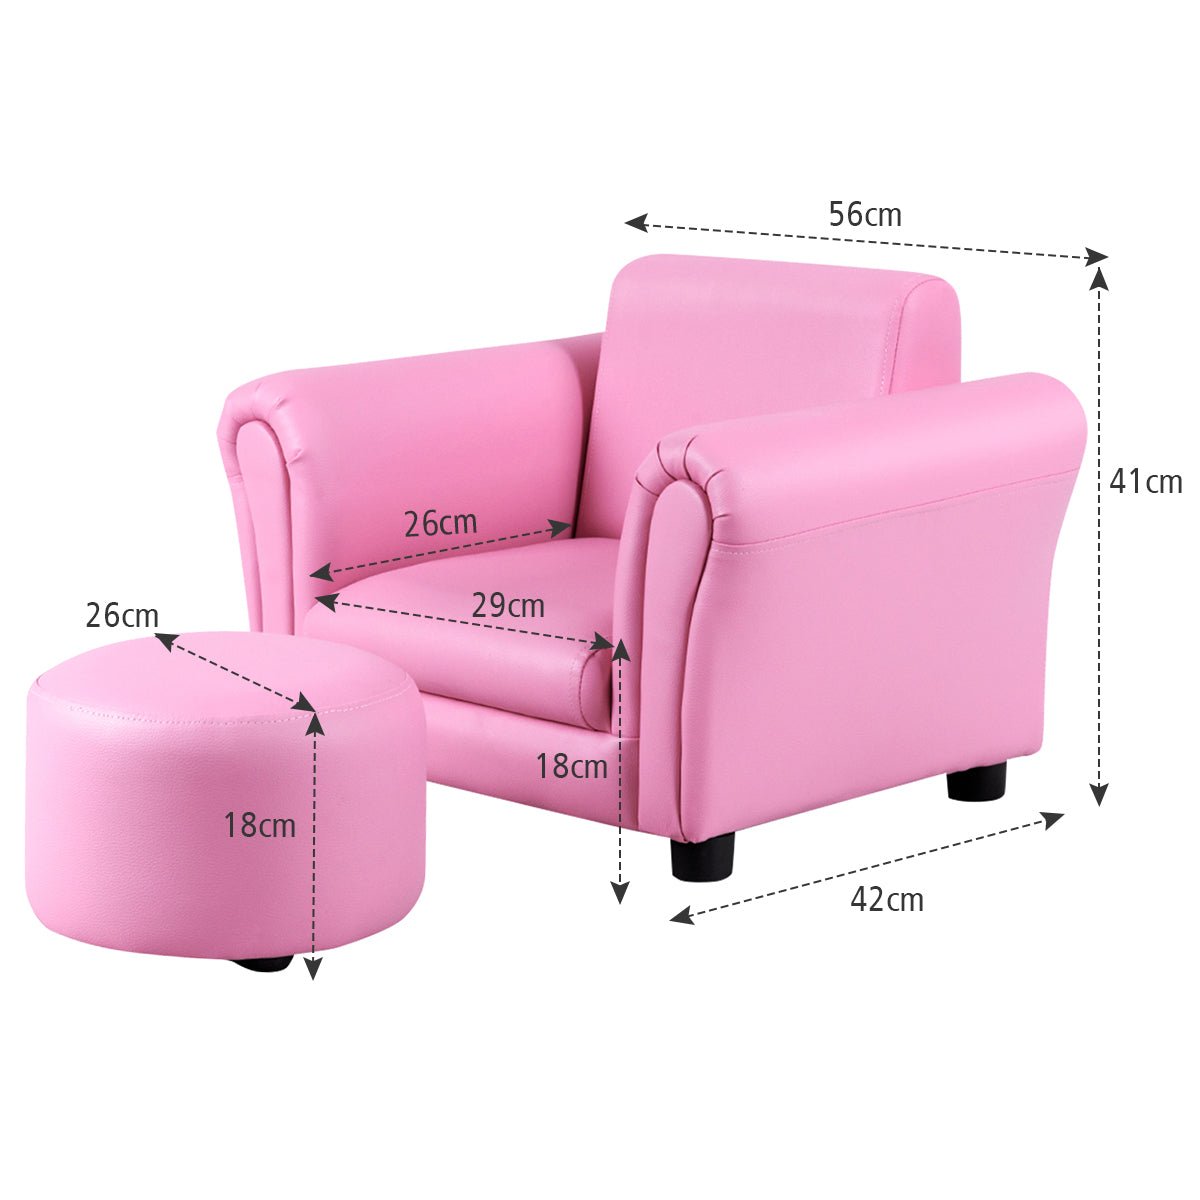 Children's Pink Sofa with Footstool - Ergonomic Comfort for Little Ones